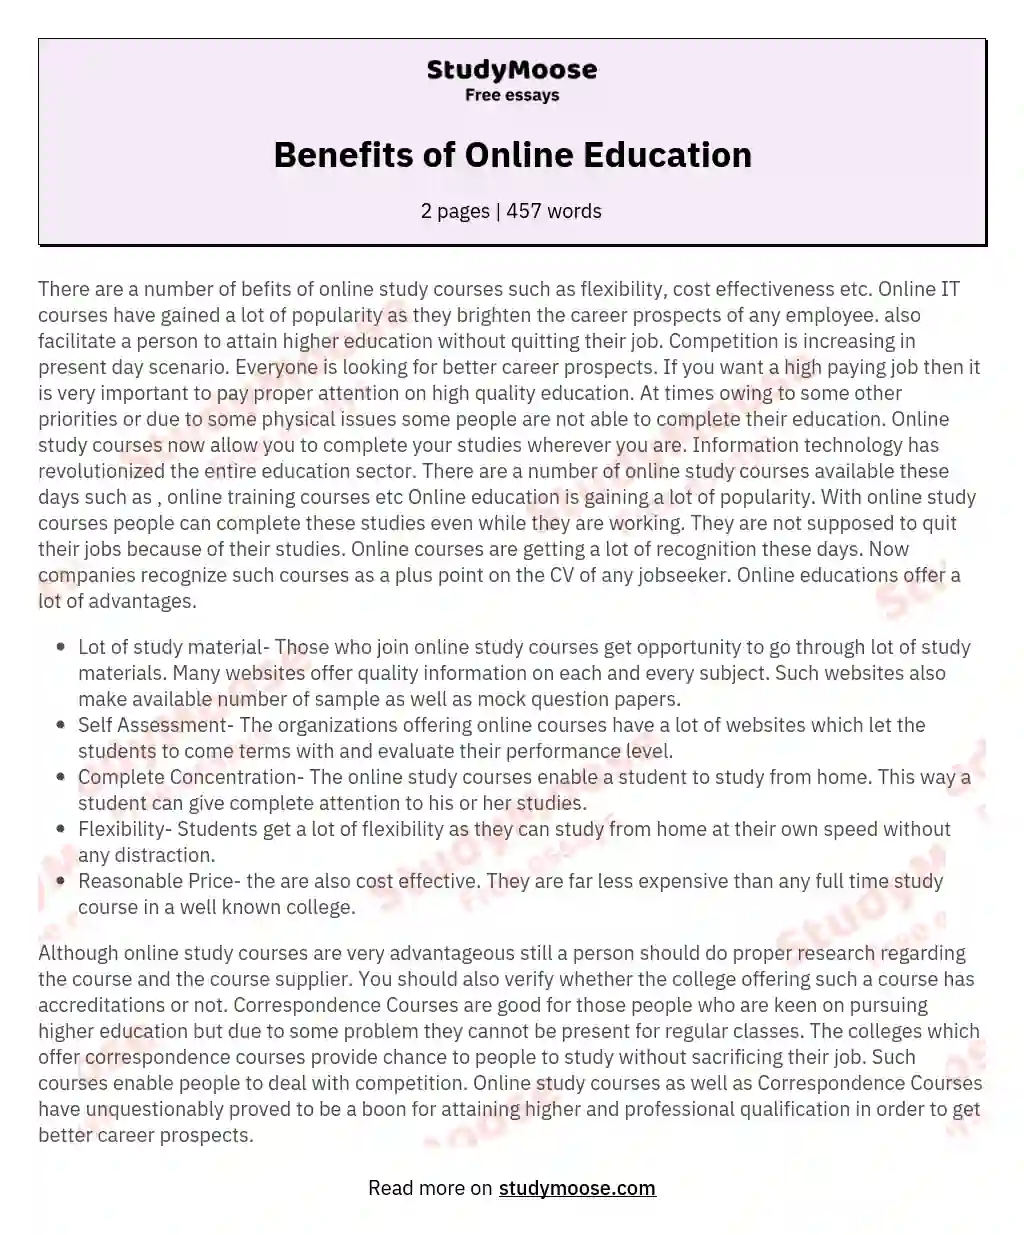 Benefits of Online Education essay